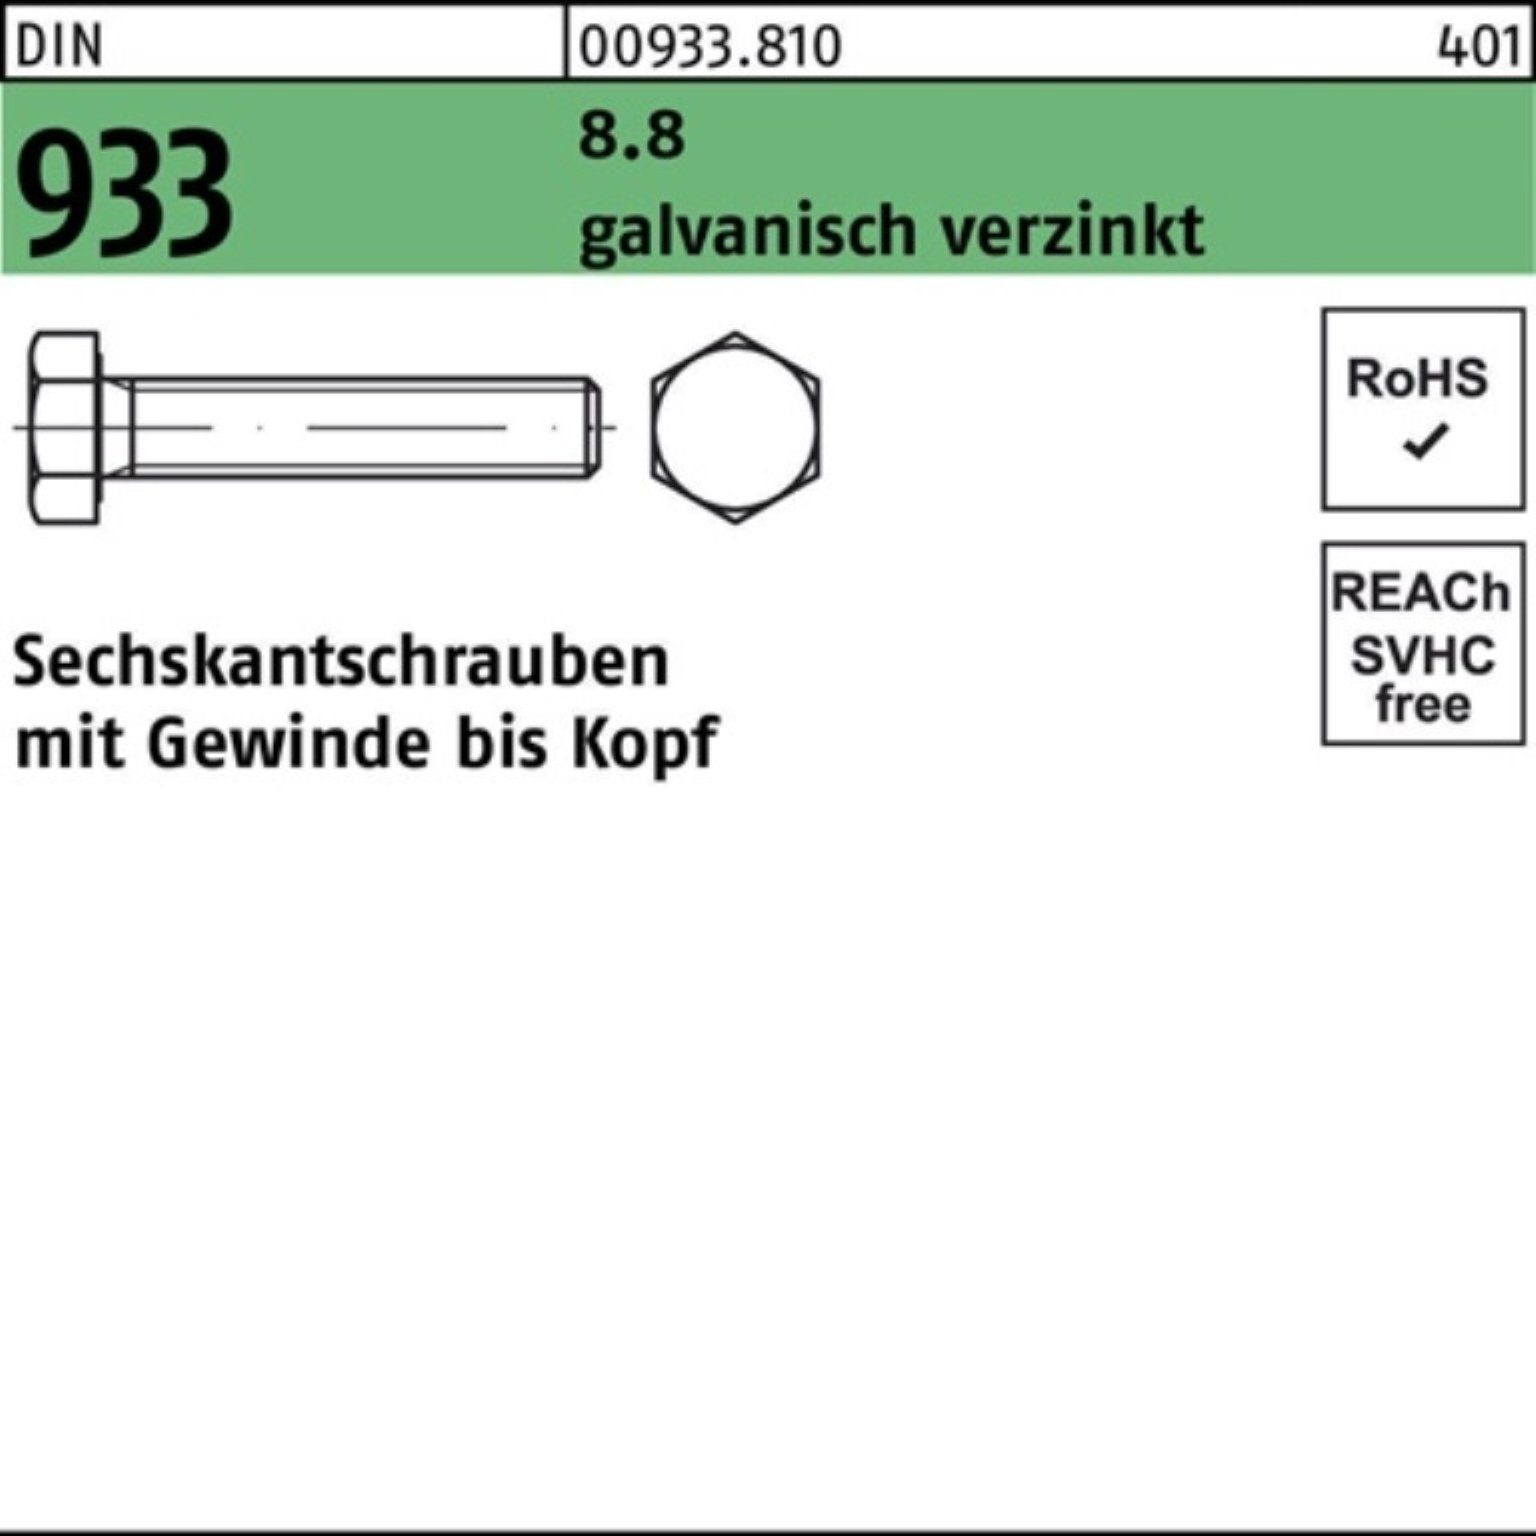 Reyher Sechskantschraube 200er 65 DIN Stü Pack VG Sechskantschraube 8.8 933 galv.verz. M8x 200